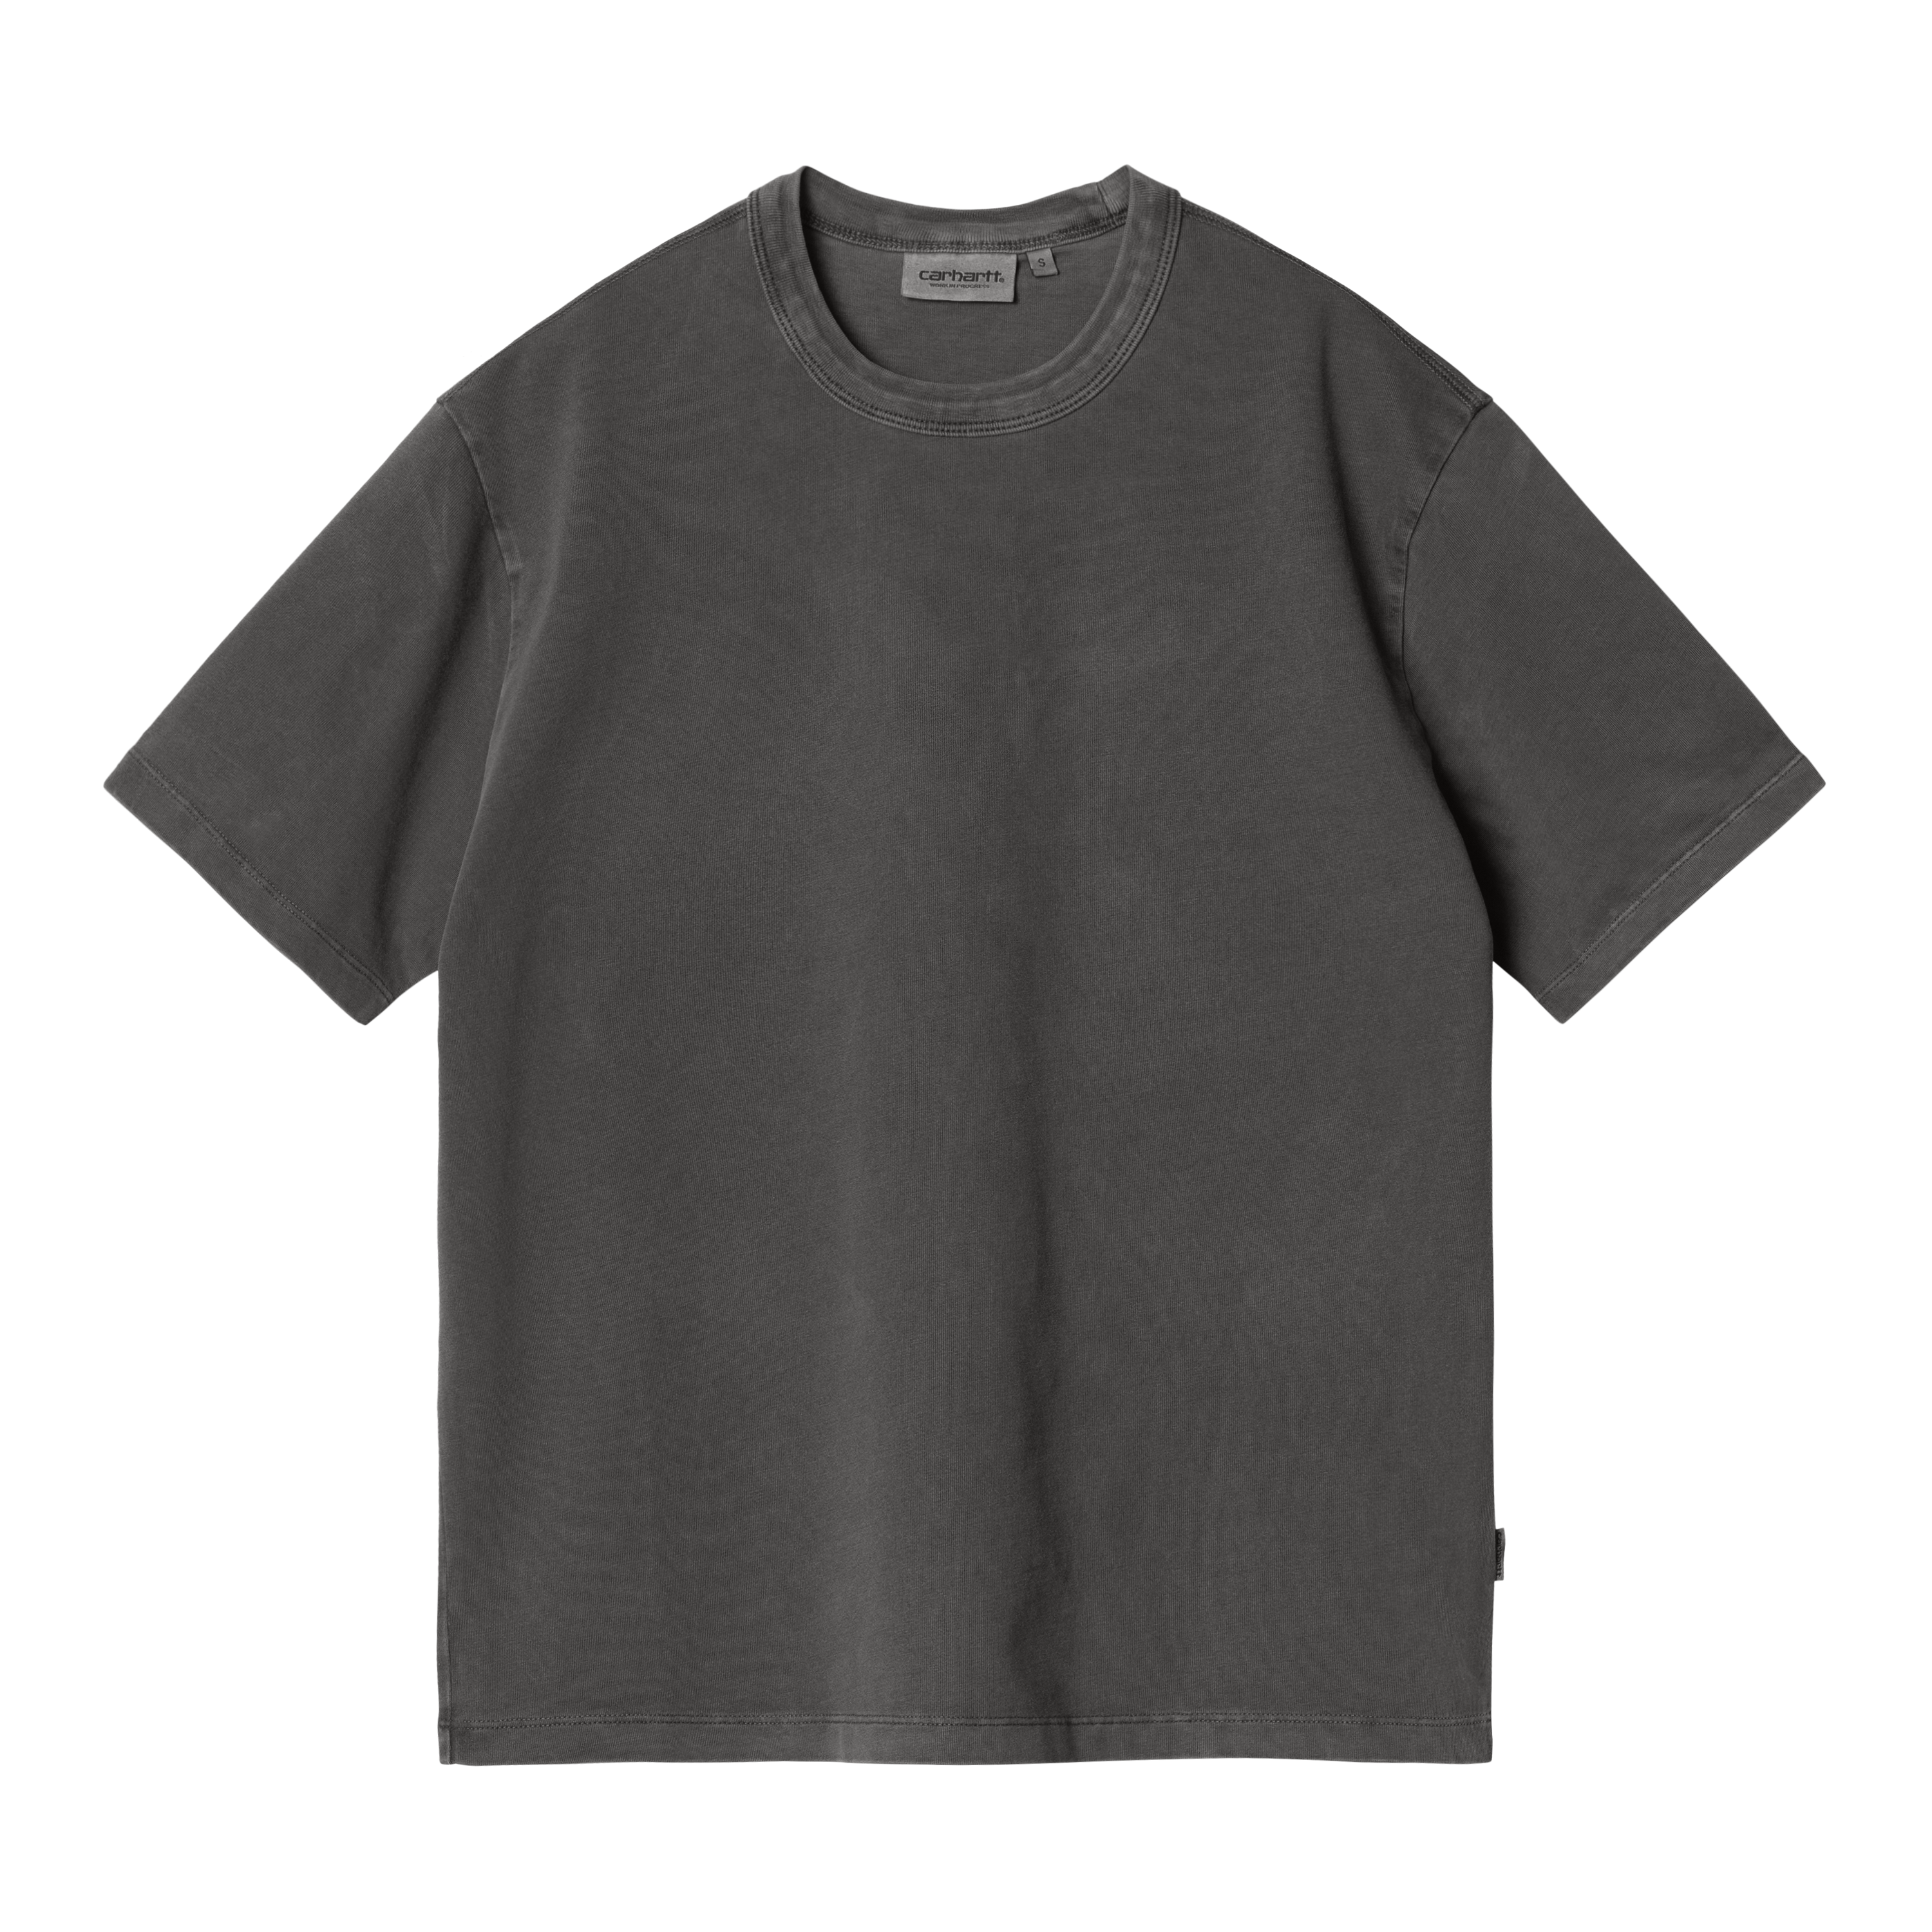 Carhartt WIP Women’s Short Sleeve Taos T-Shirt in Black